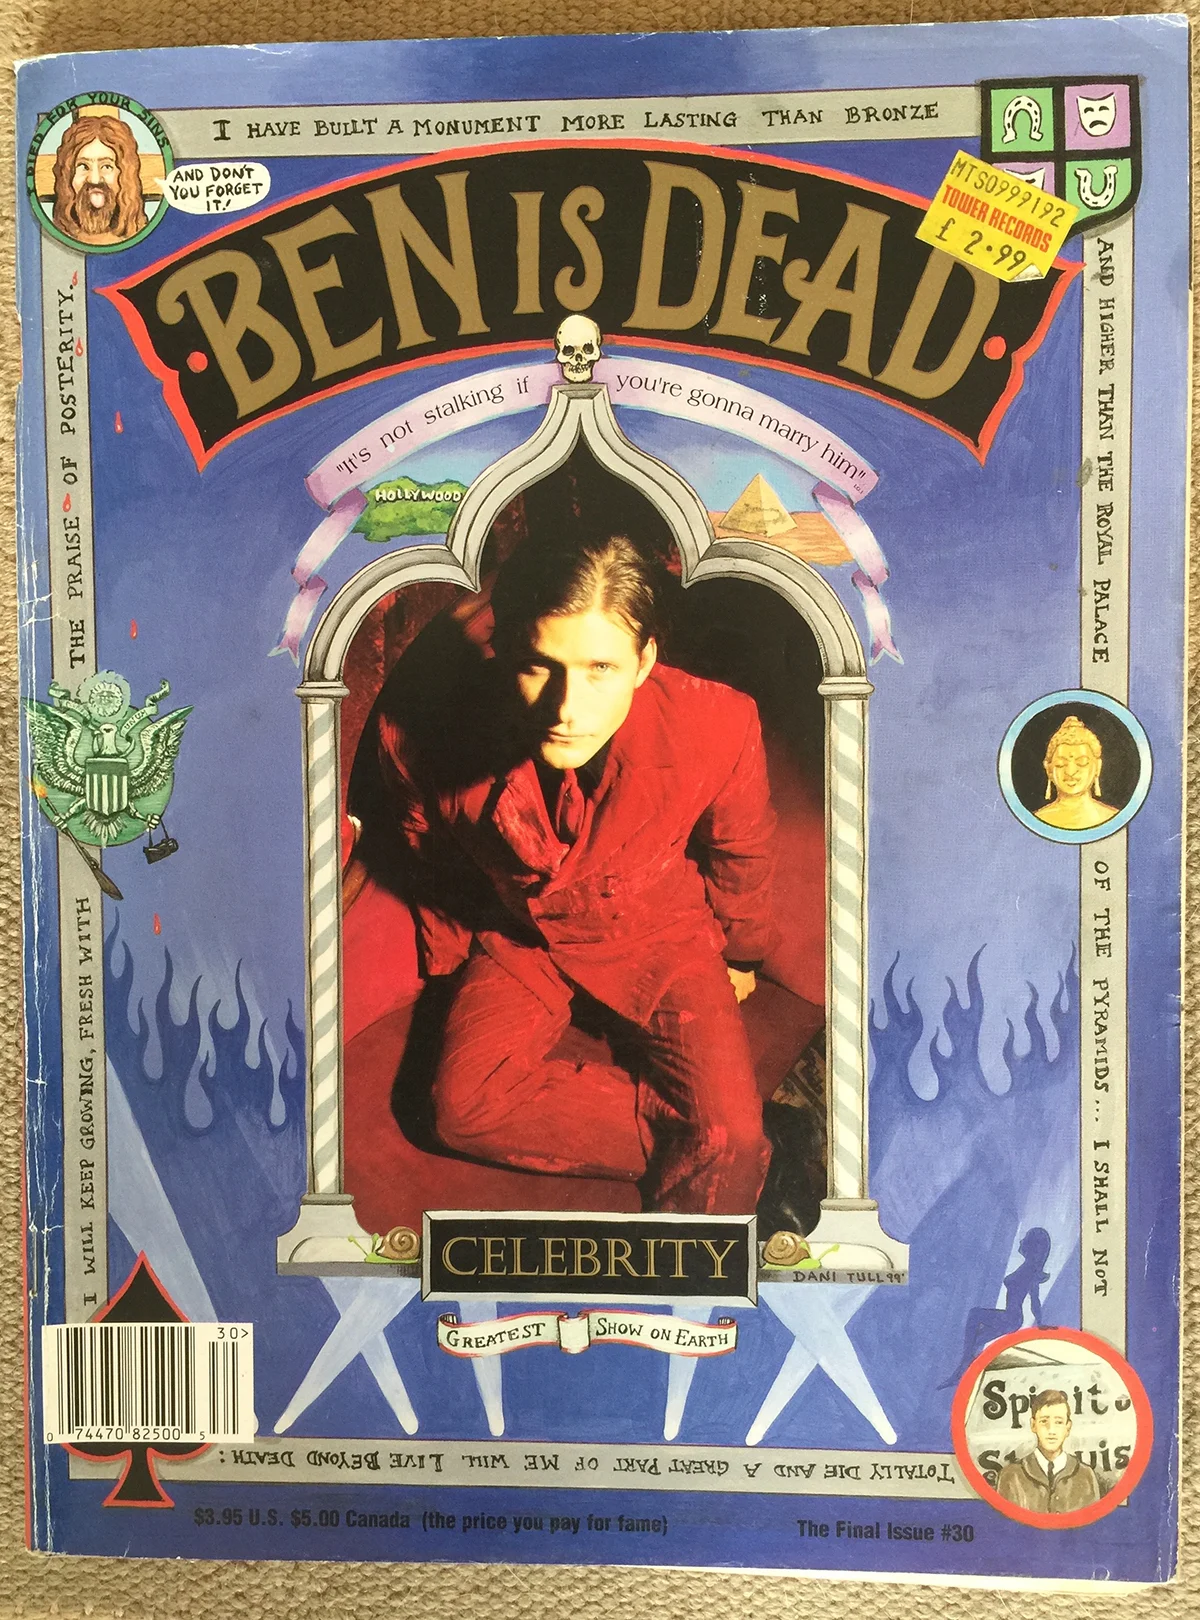 No. 30: Celebrity issue, 1999